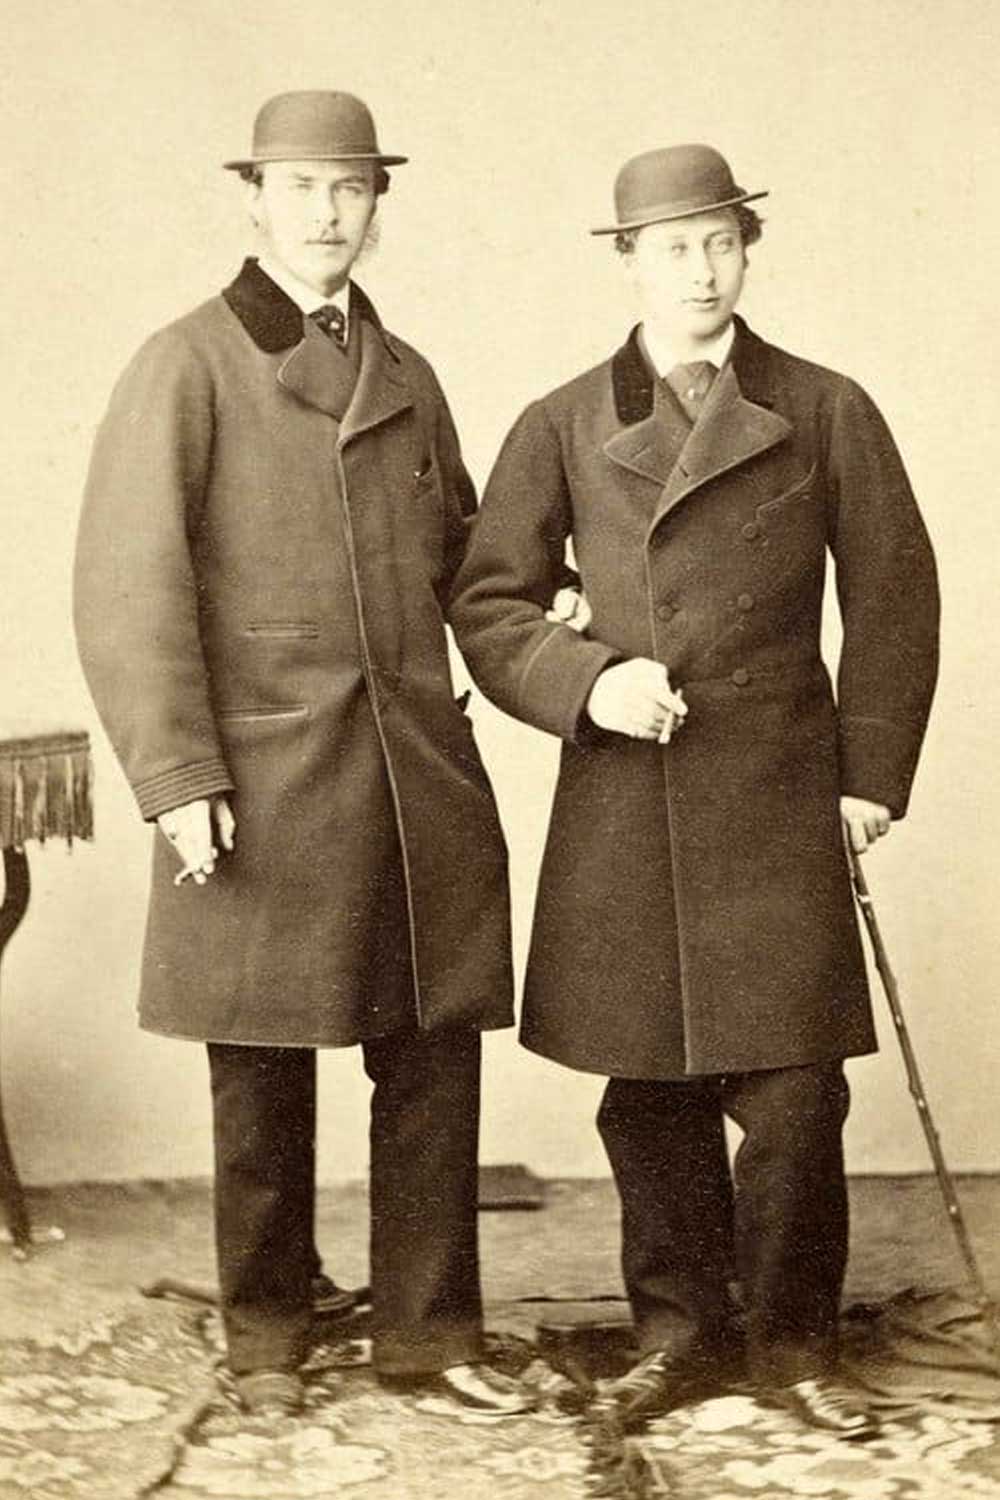 Chesterfield Overcoat 19th century